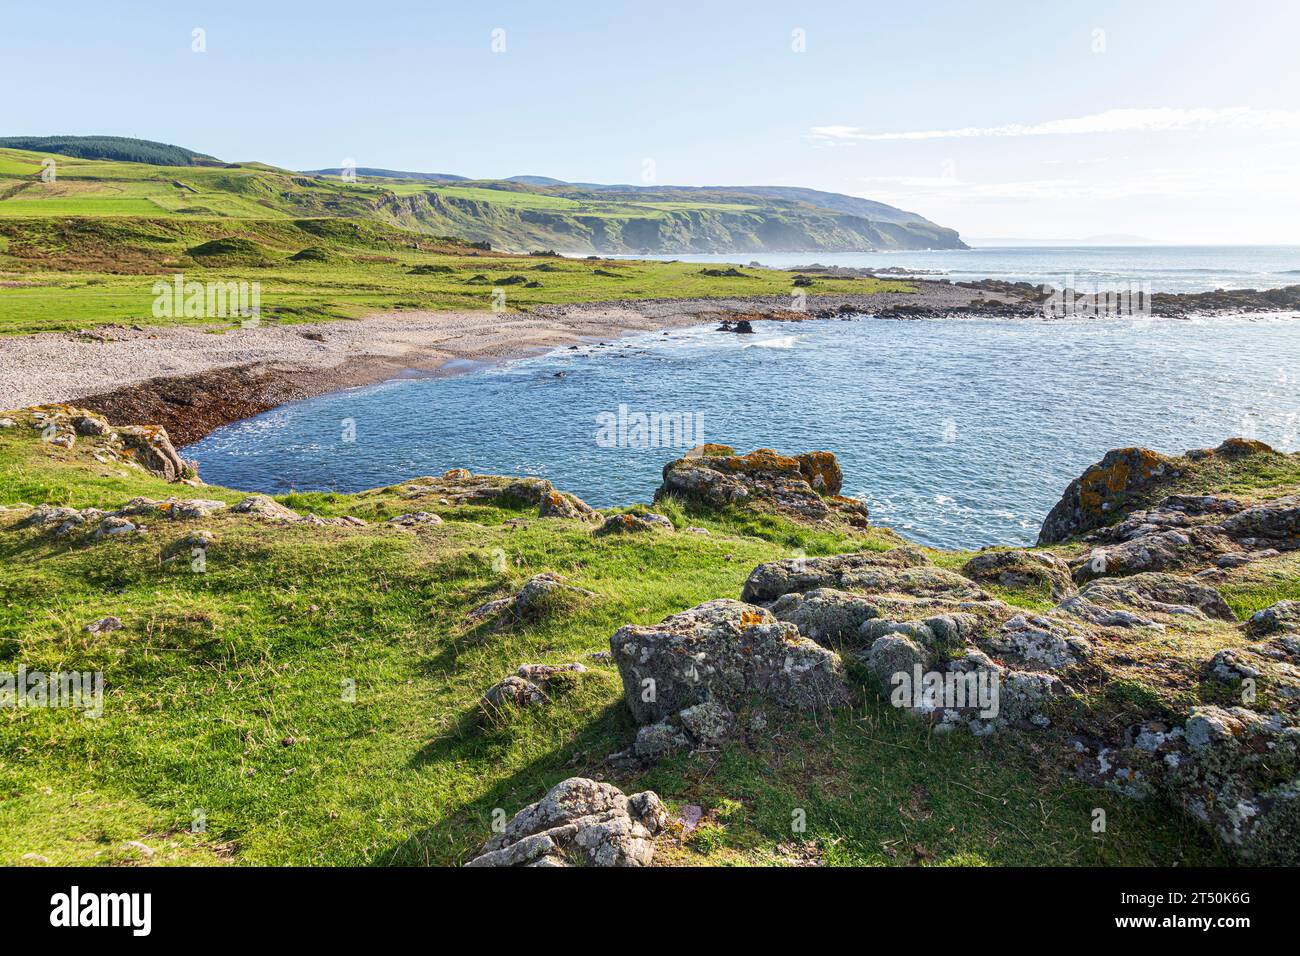 The beach next to Uisaed Point, Machrihanish on the Kintyre Peninsula, Argyll & Bute, Scotland UK Stock Photo